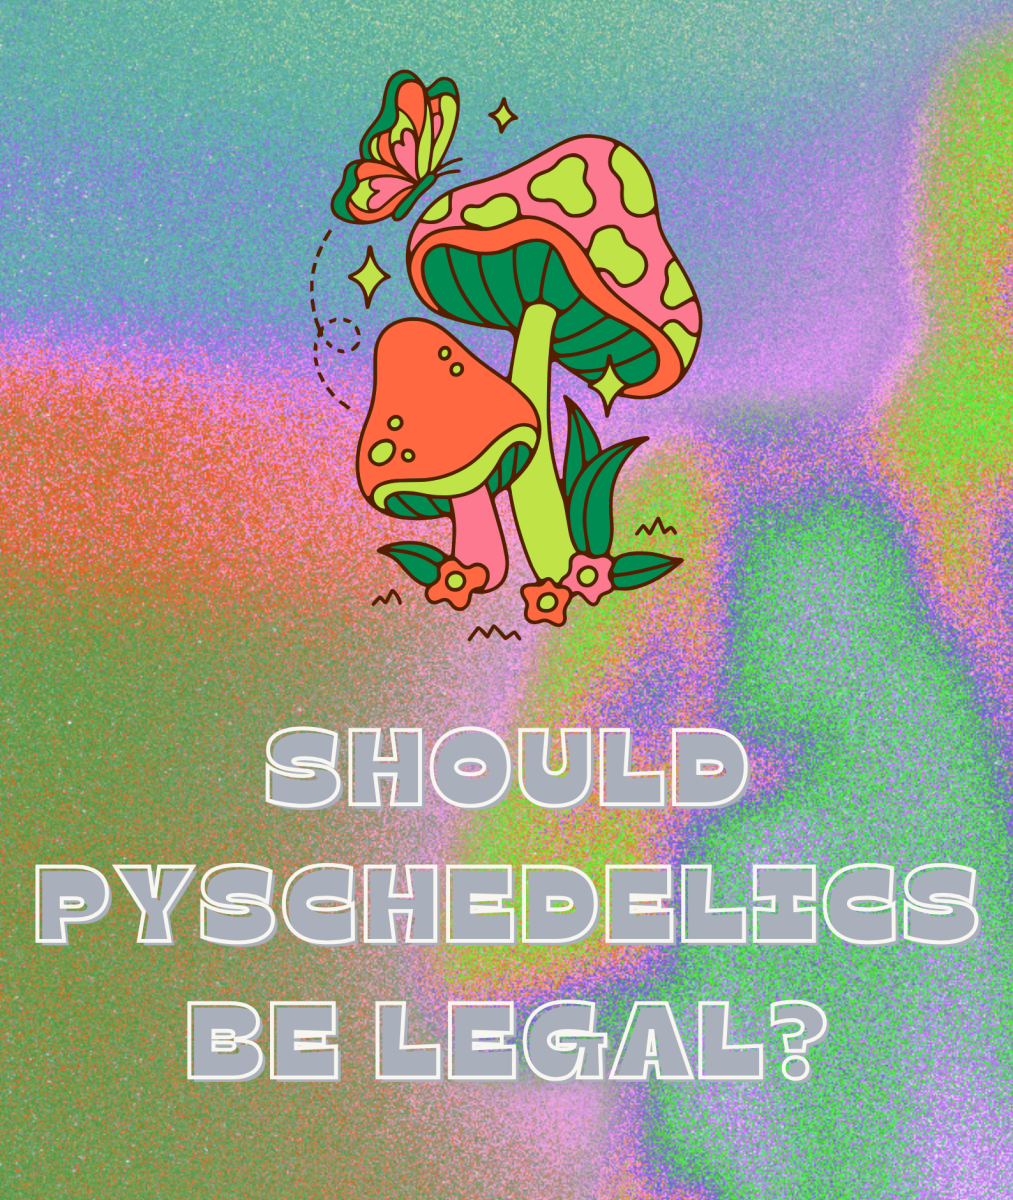 SB519 seeks decriminalization of psychedelics for medical use in California